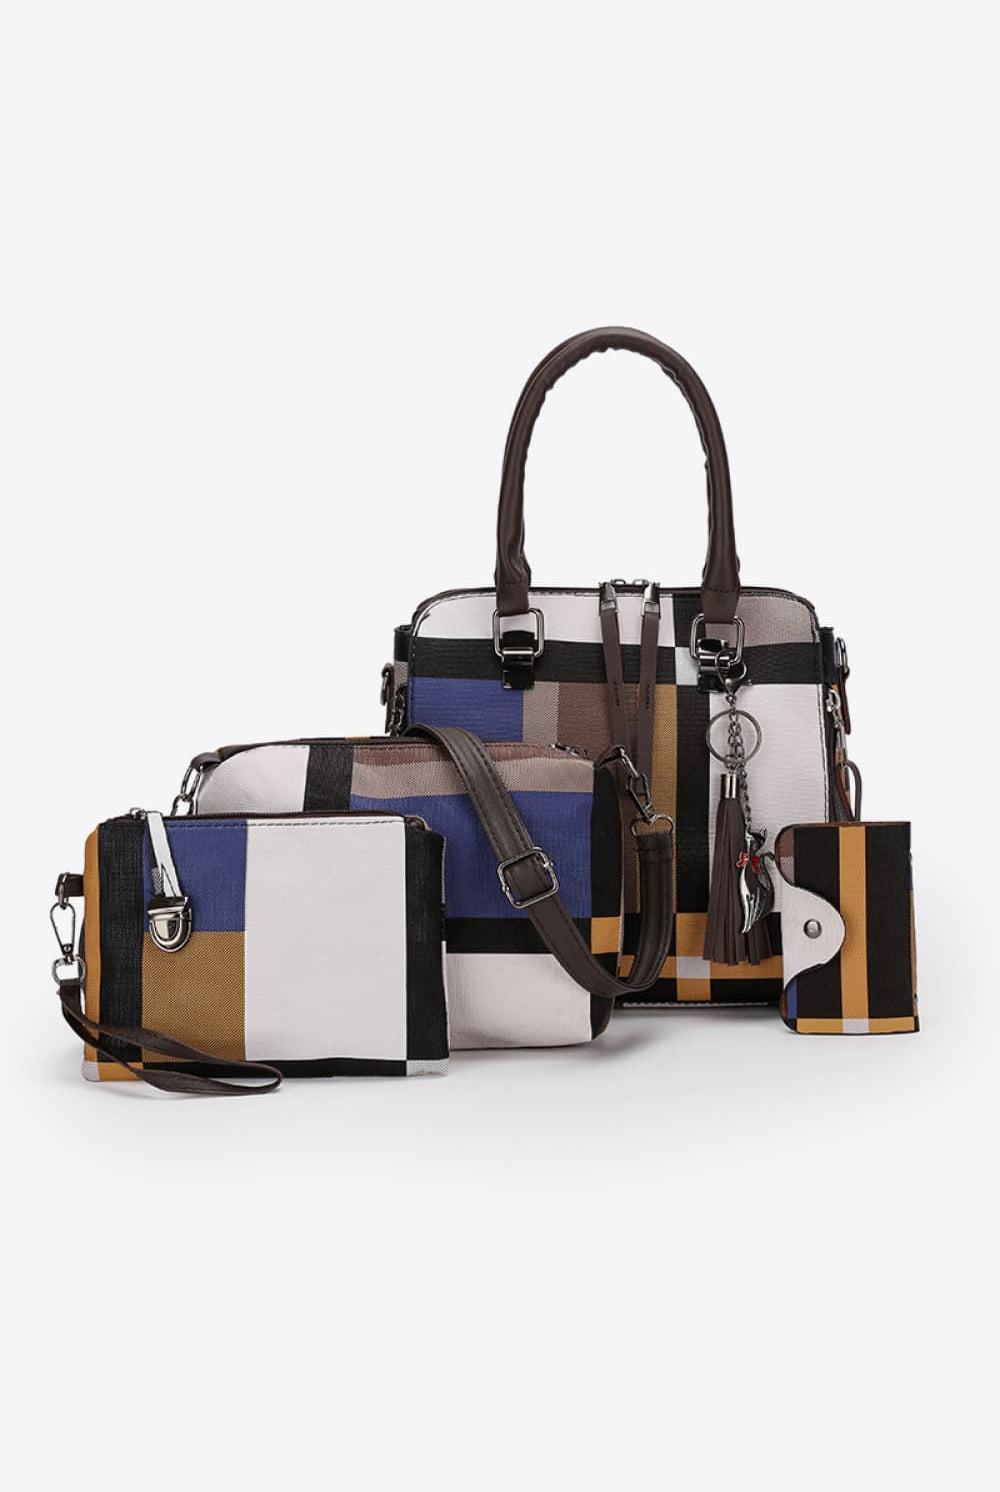 White Smoke 4-Piece Color Block PU Leather Bag Set Handbags